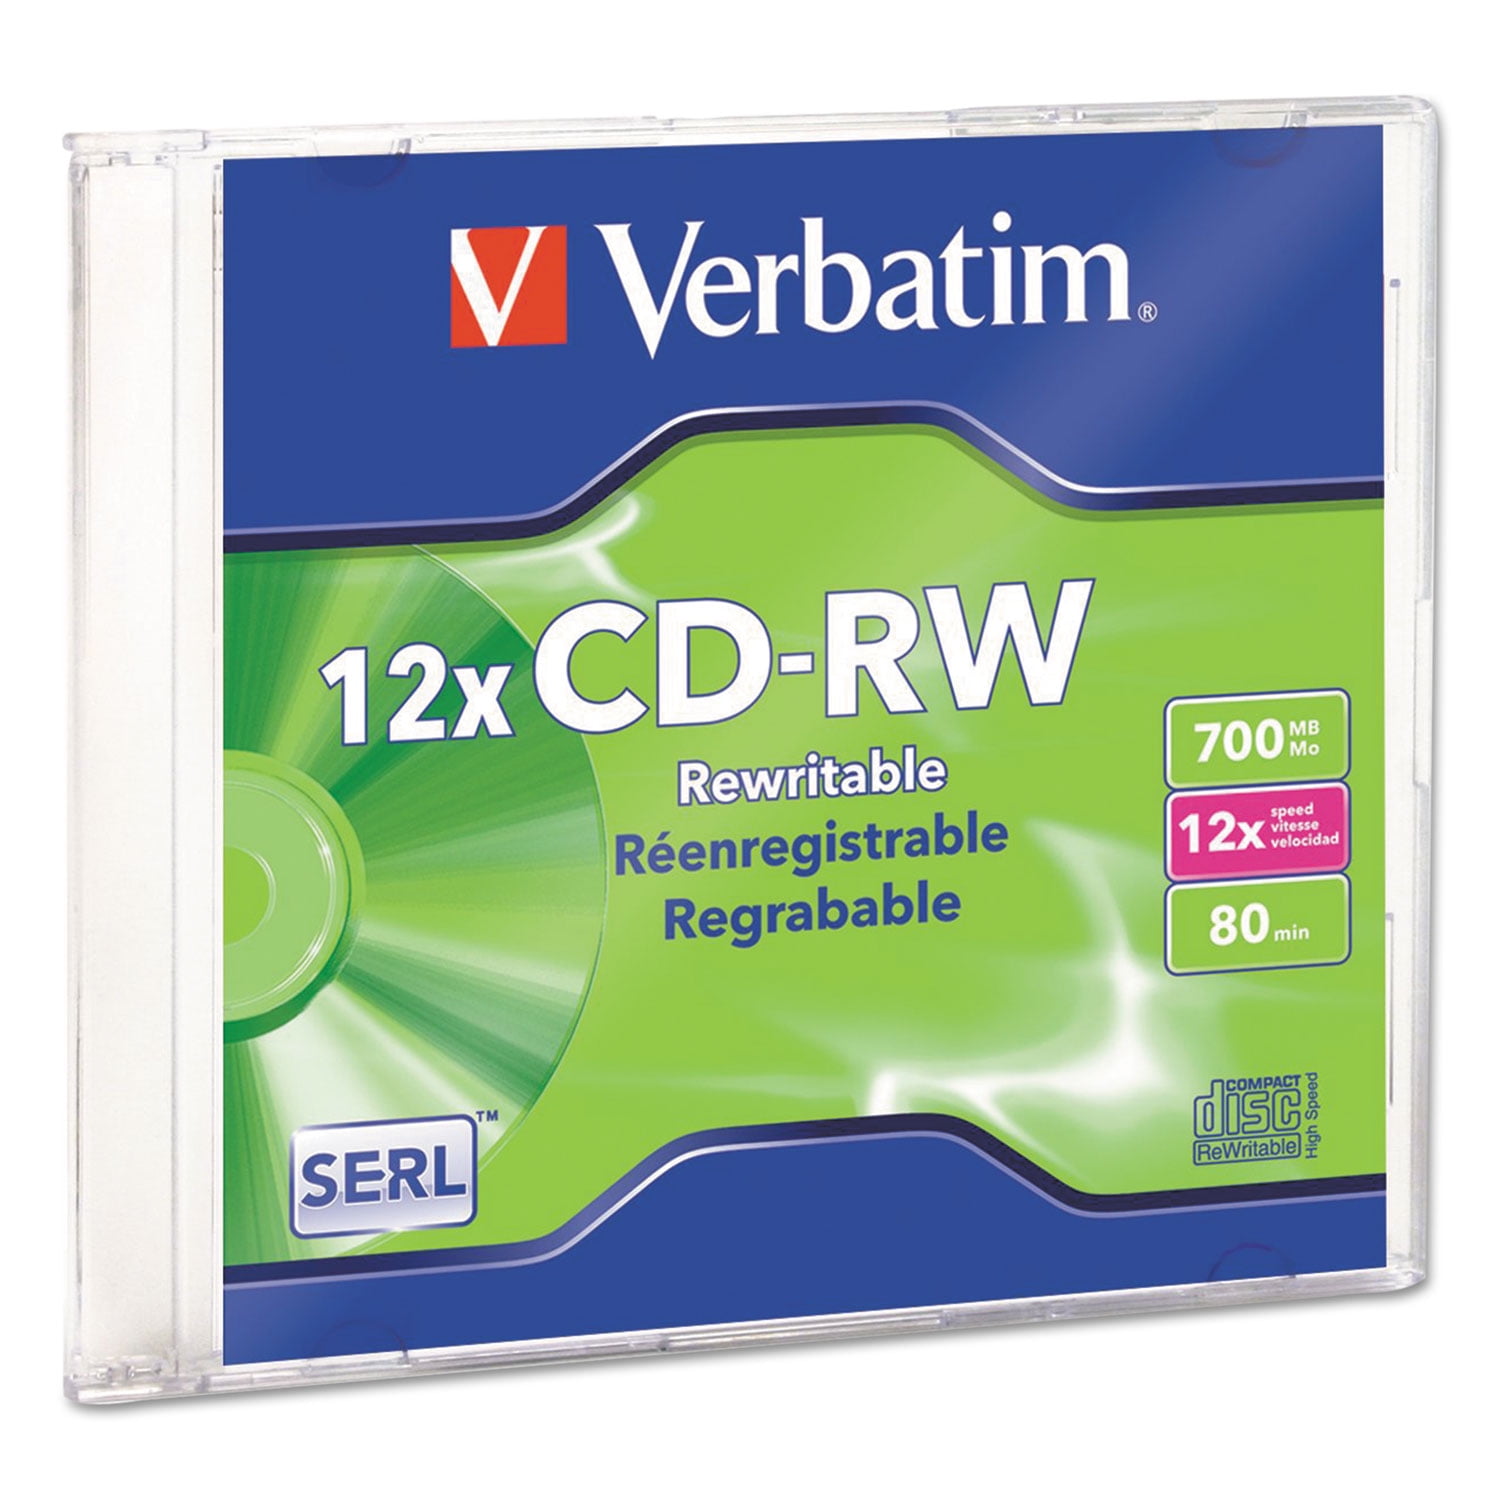 20 Pack Slim Case Verbatim CD+RW 700MB 2X-12X Color Rewritable Media Disc 